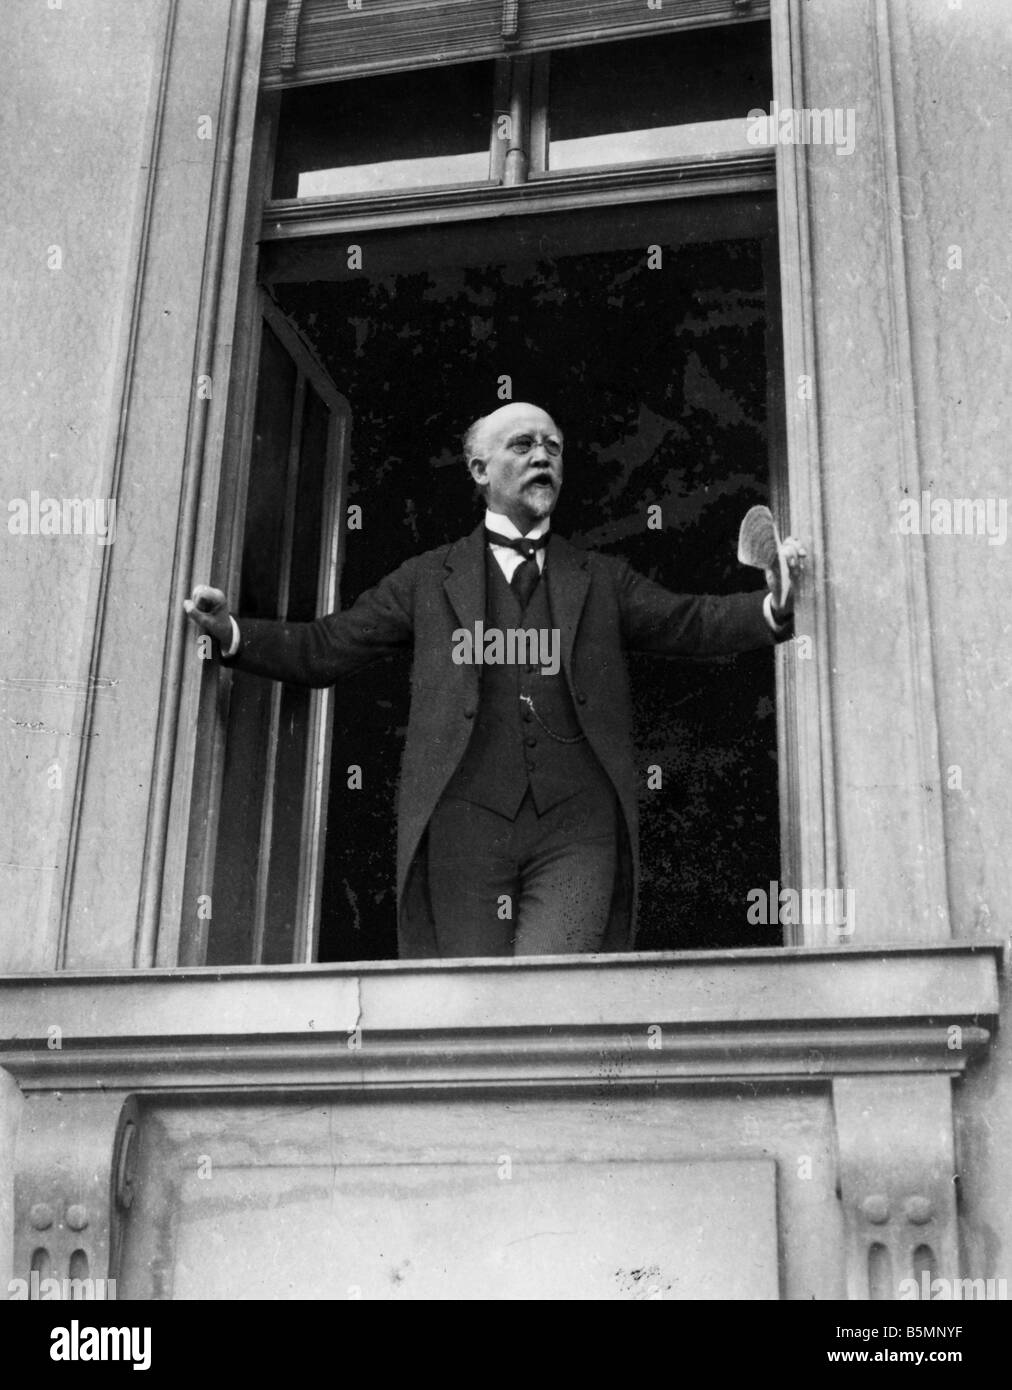 8 1918 119 A1 21 B E 1918 19 Révolution Discours de Scheidemann Révolution de Novembre 1918 devient chancelier du Reich Friedrich Ebert Banque D'Images